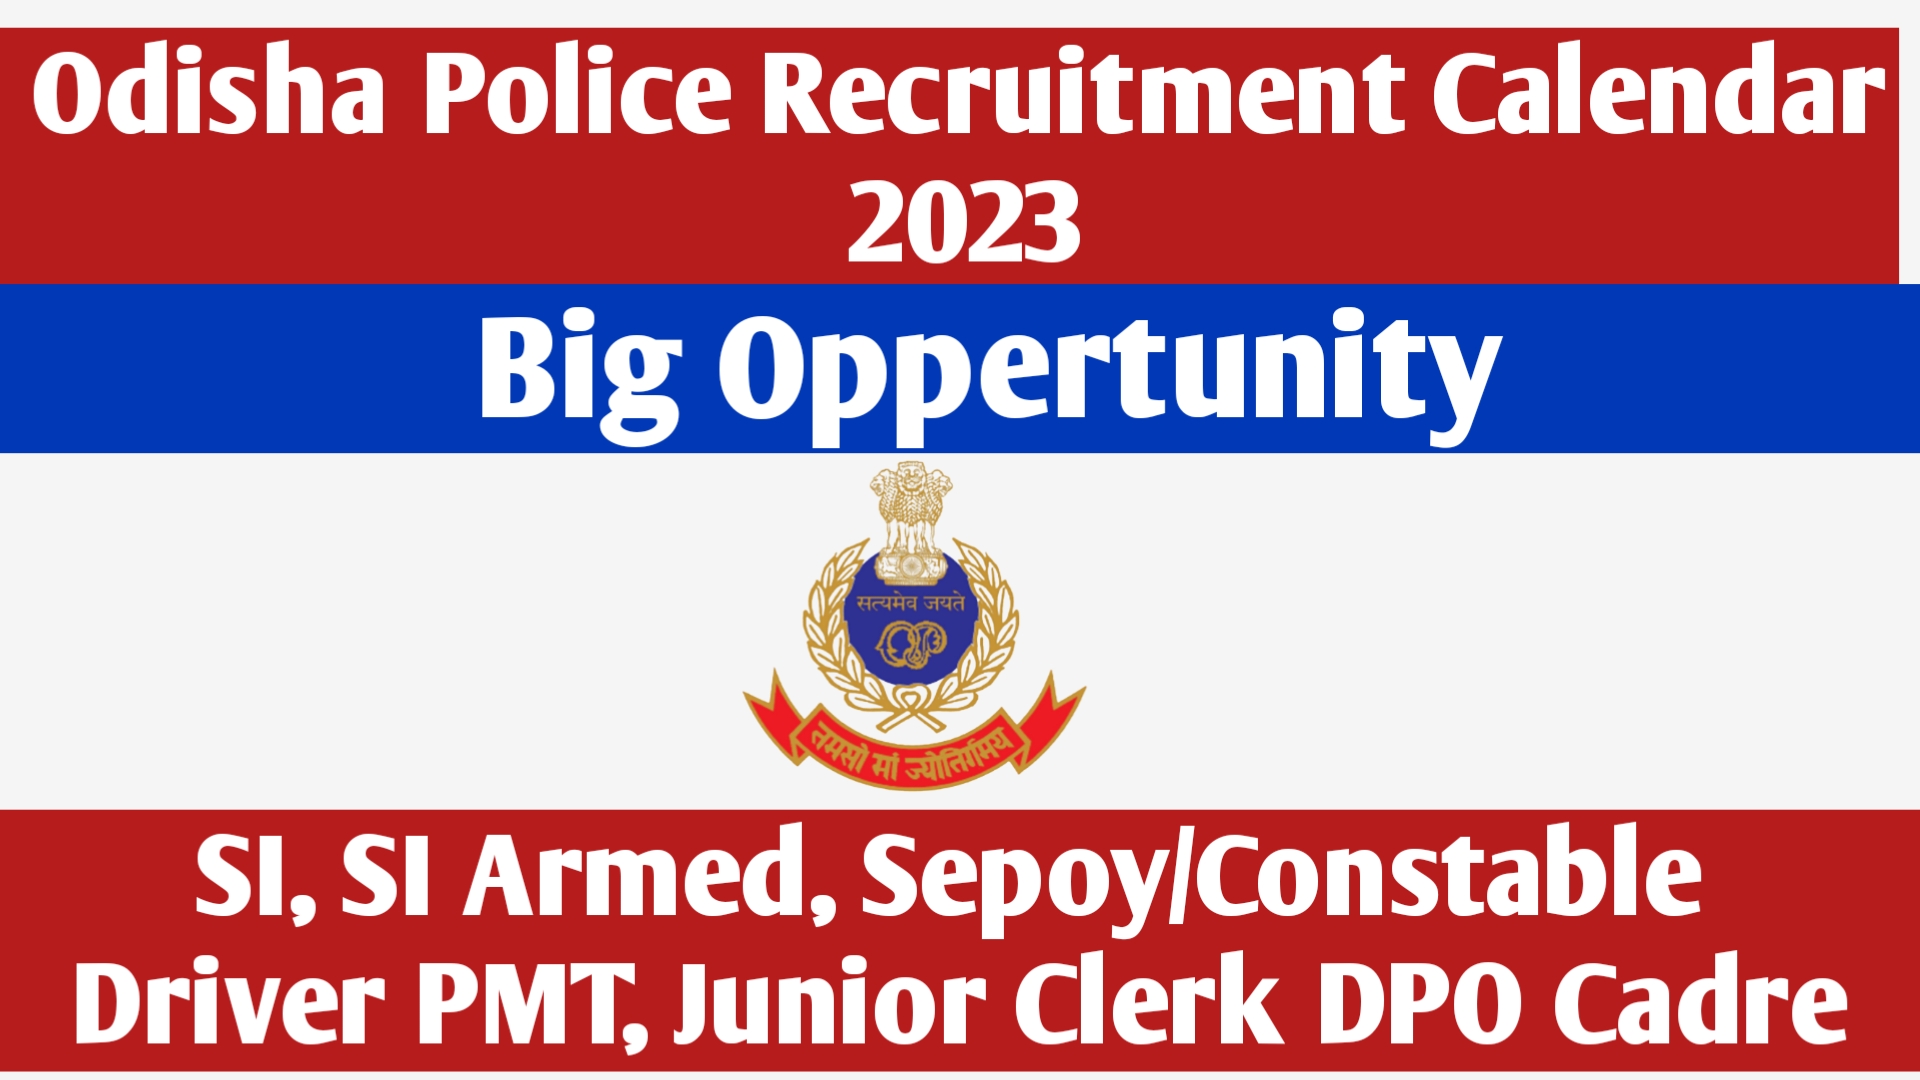 Odisha Police Recruitment Calendar 2023 Out